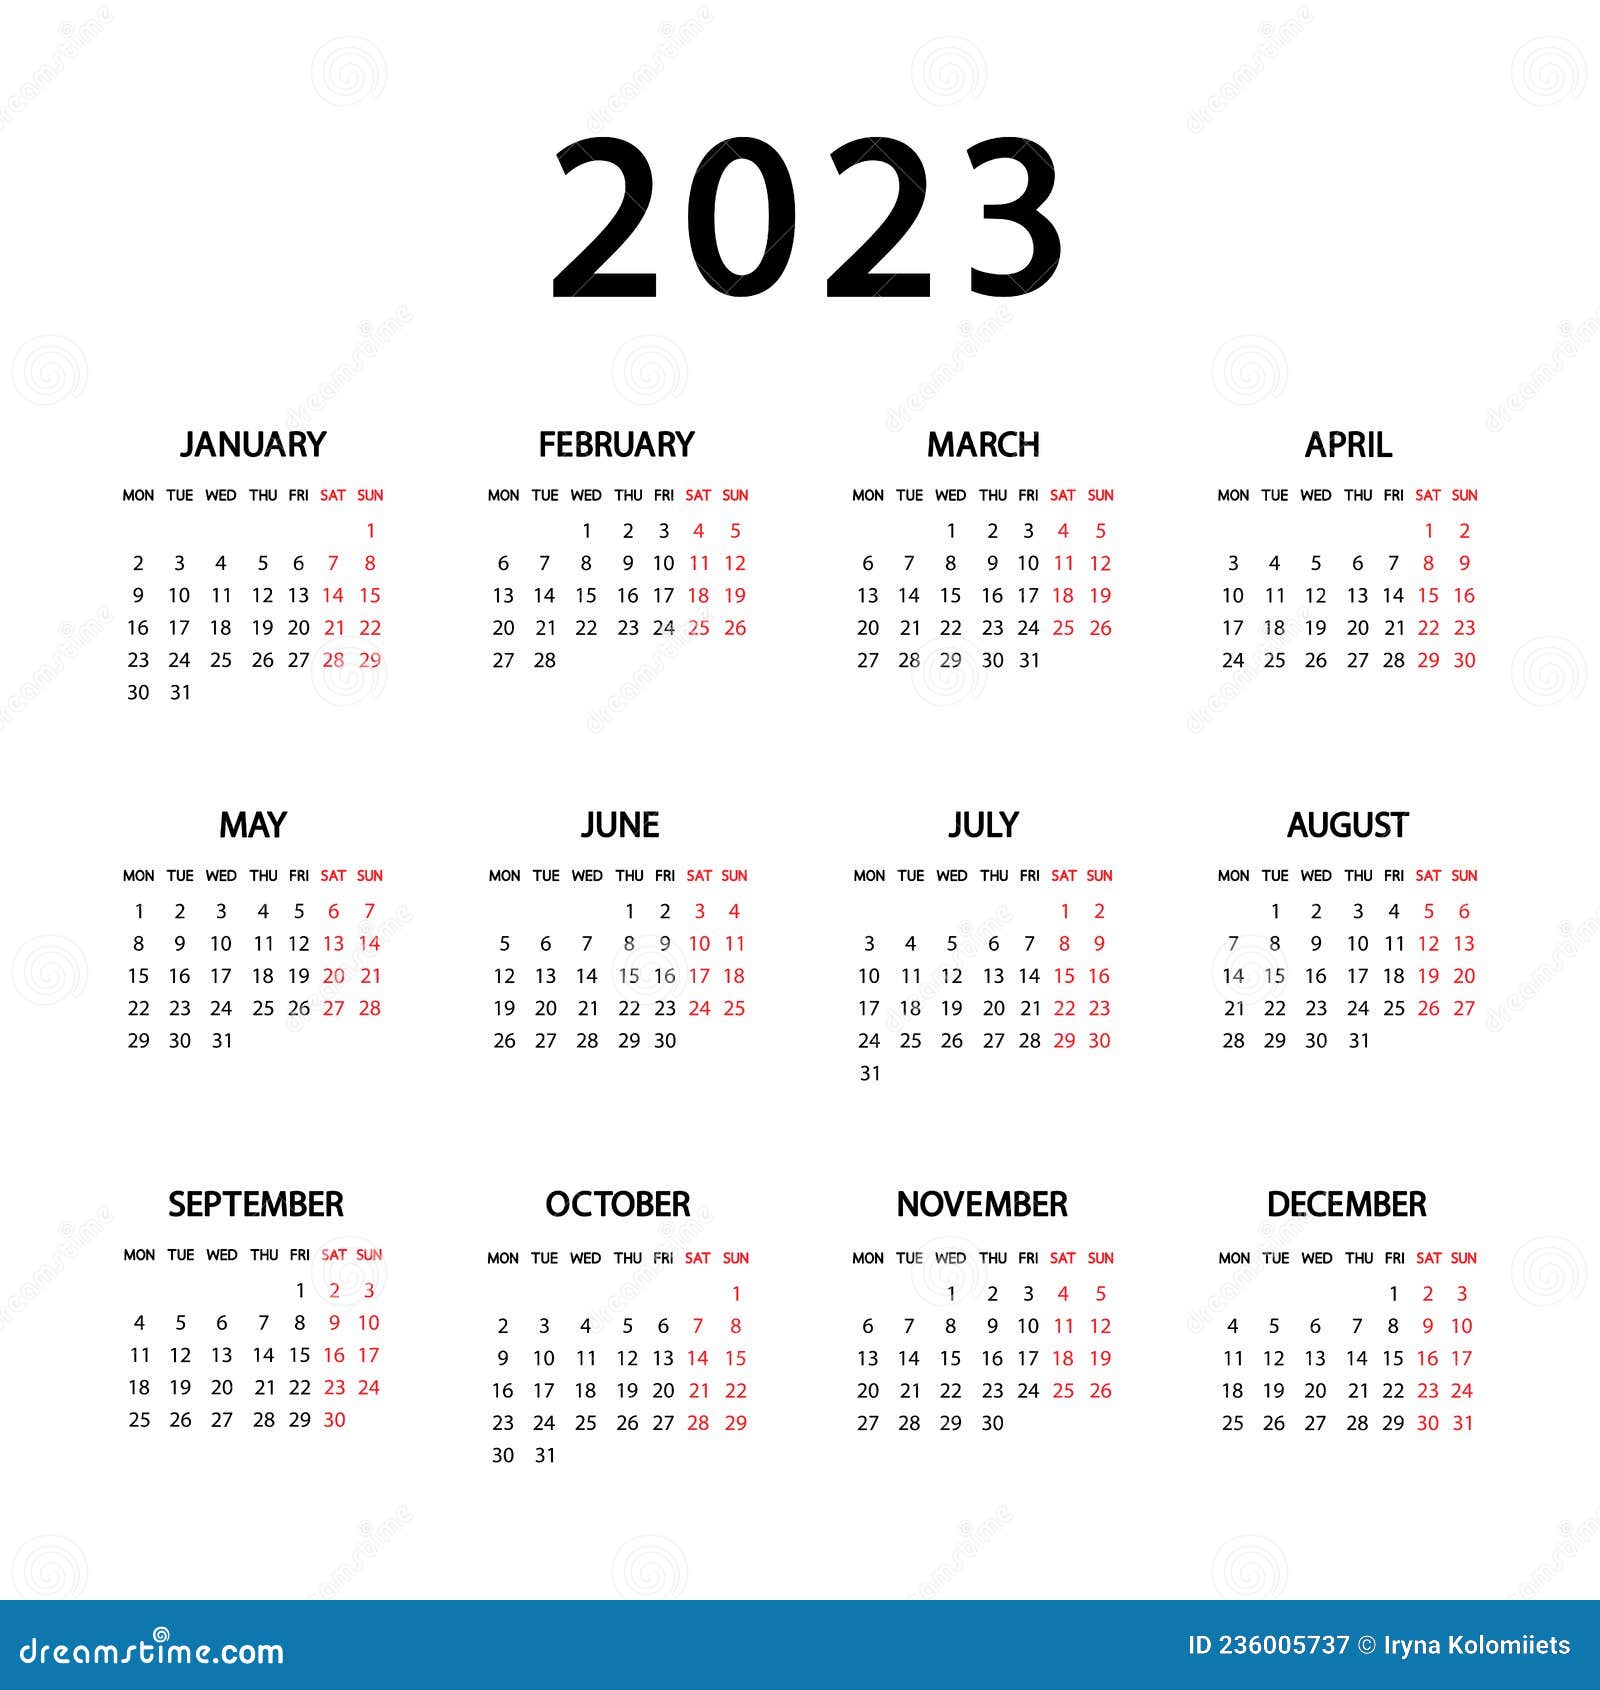 Каким будет январь 2023 года. Календарь 2023. Календарь на 2023 год русский. Календарик на 2023 год вертикальный. Календарная сетка на 2023 год.